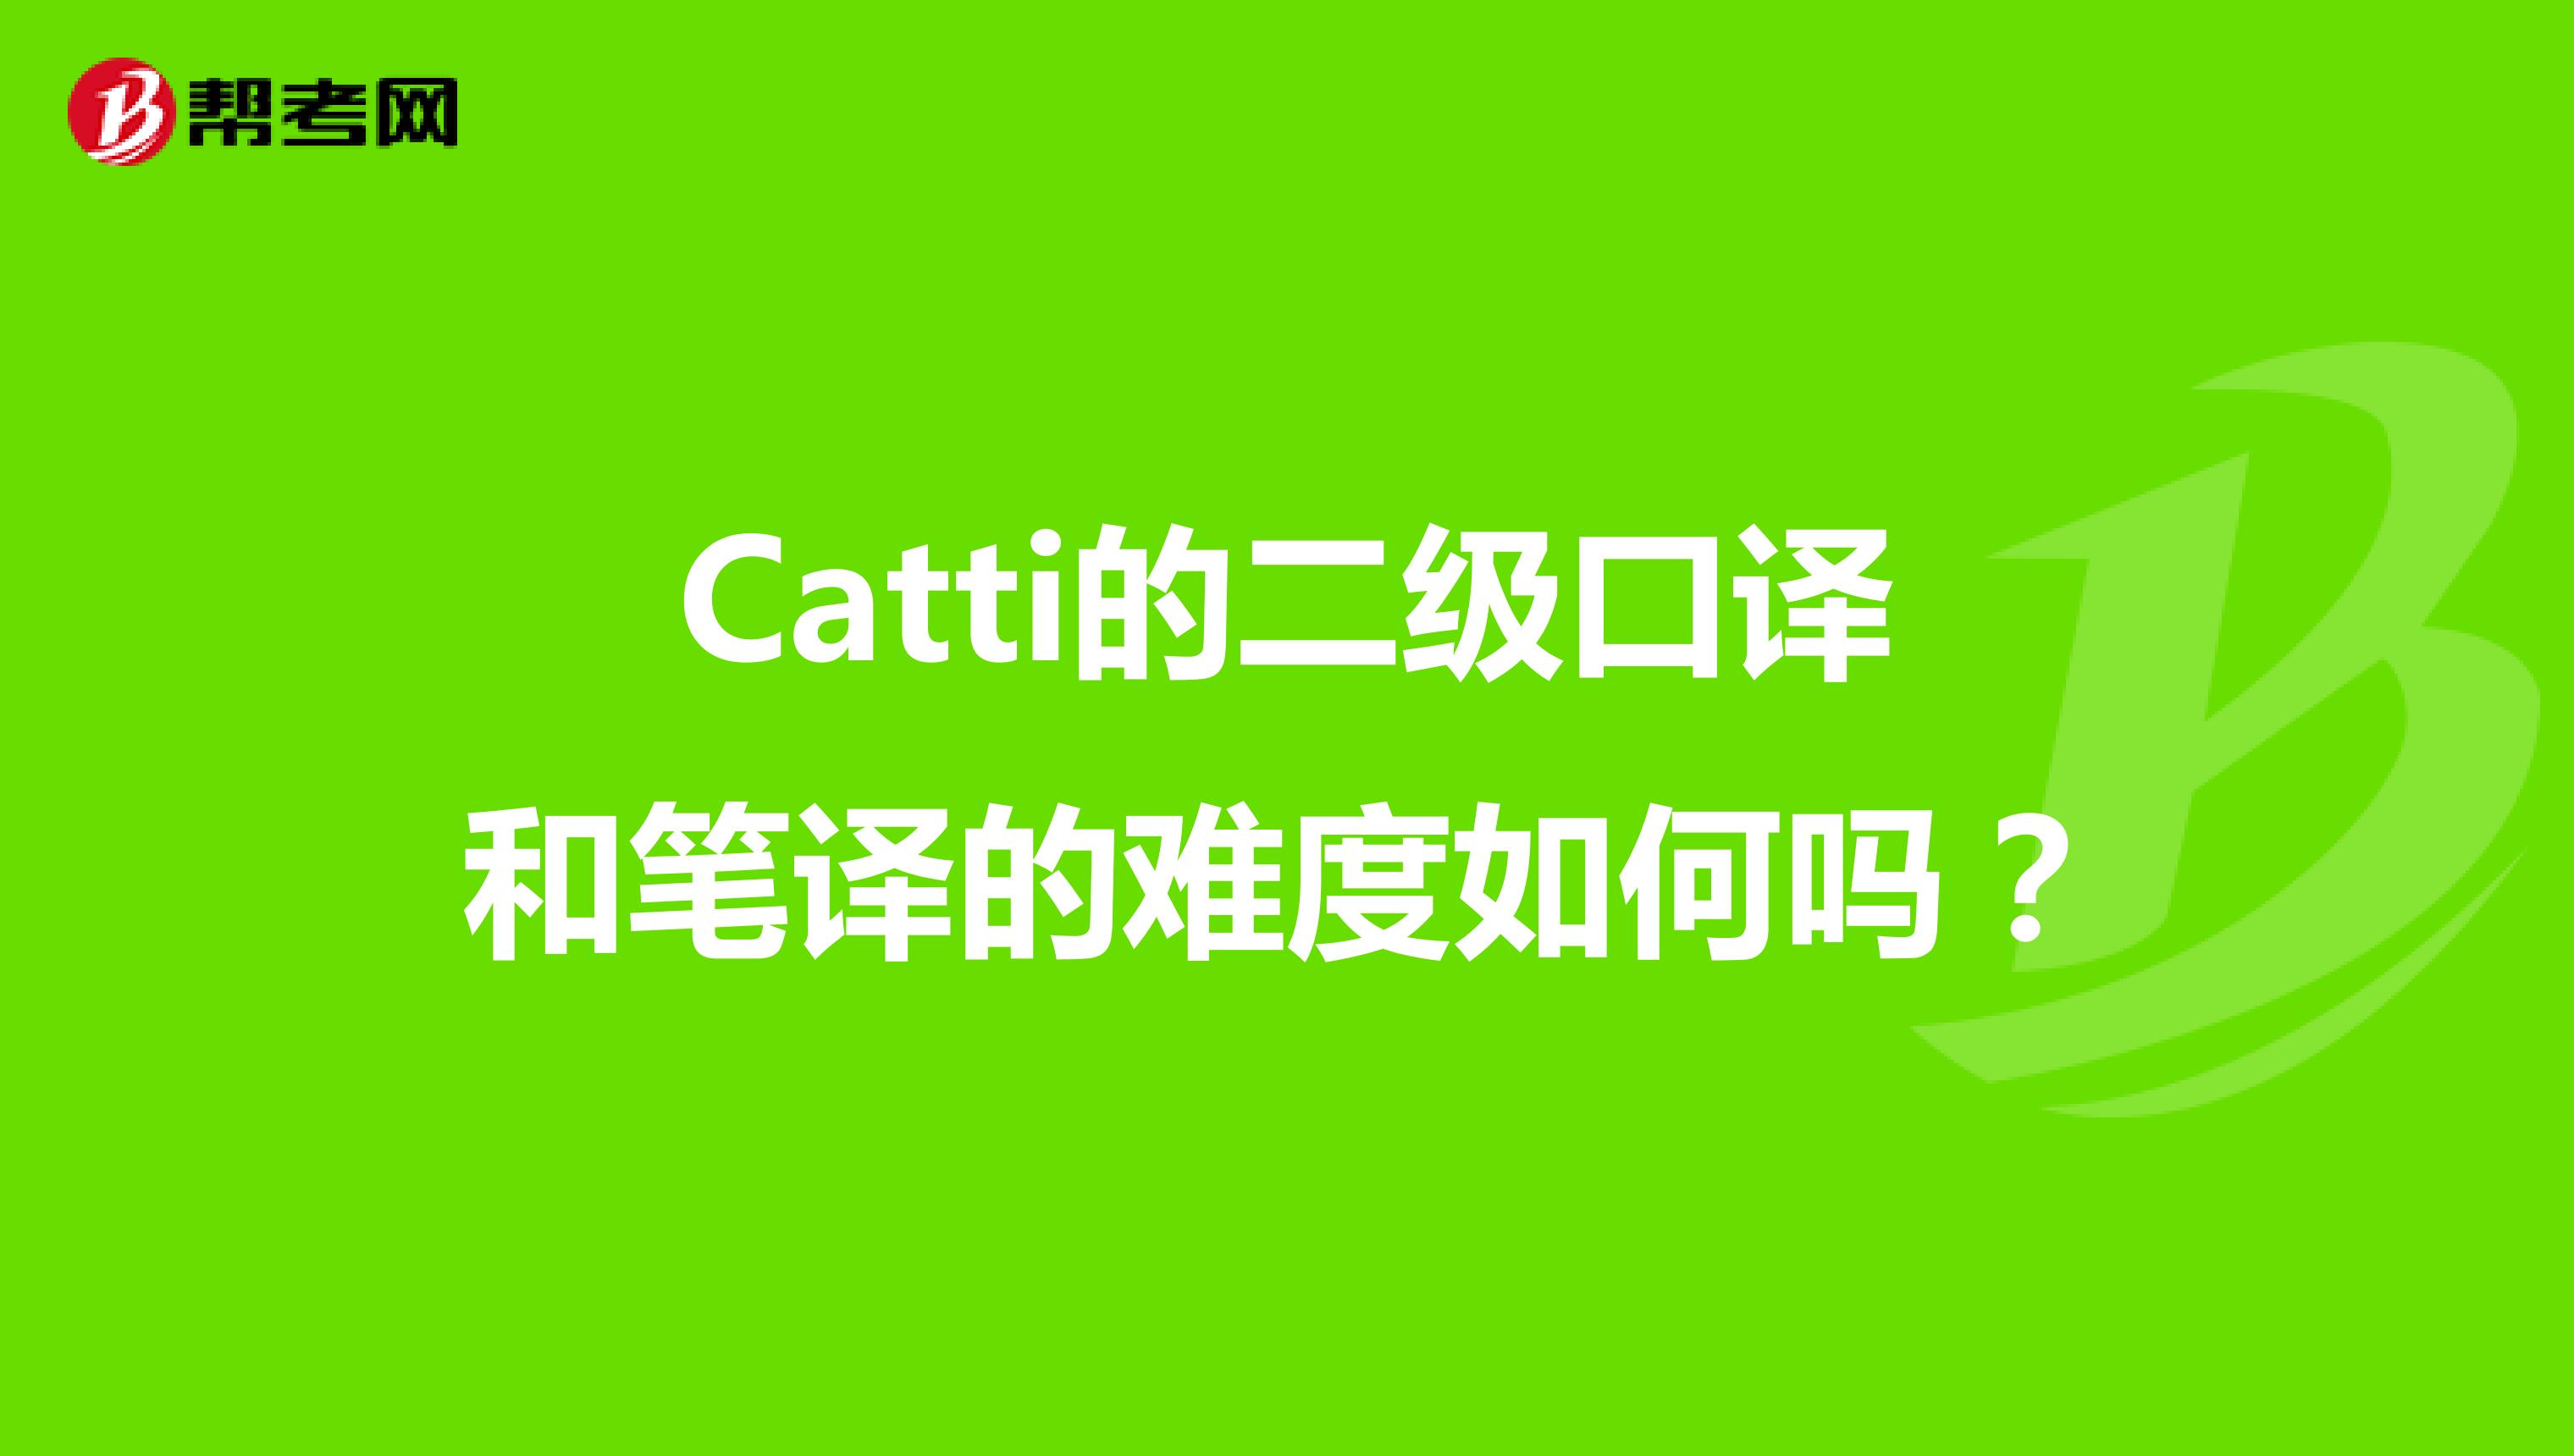 Catti的二级口译和笔译的难度如何吗？